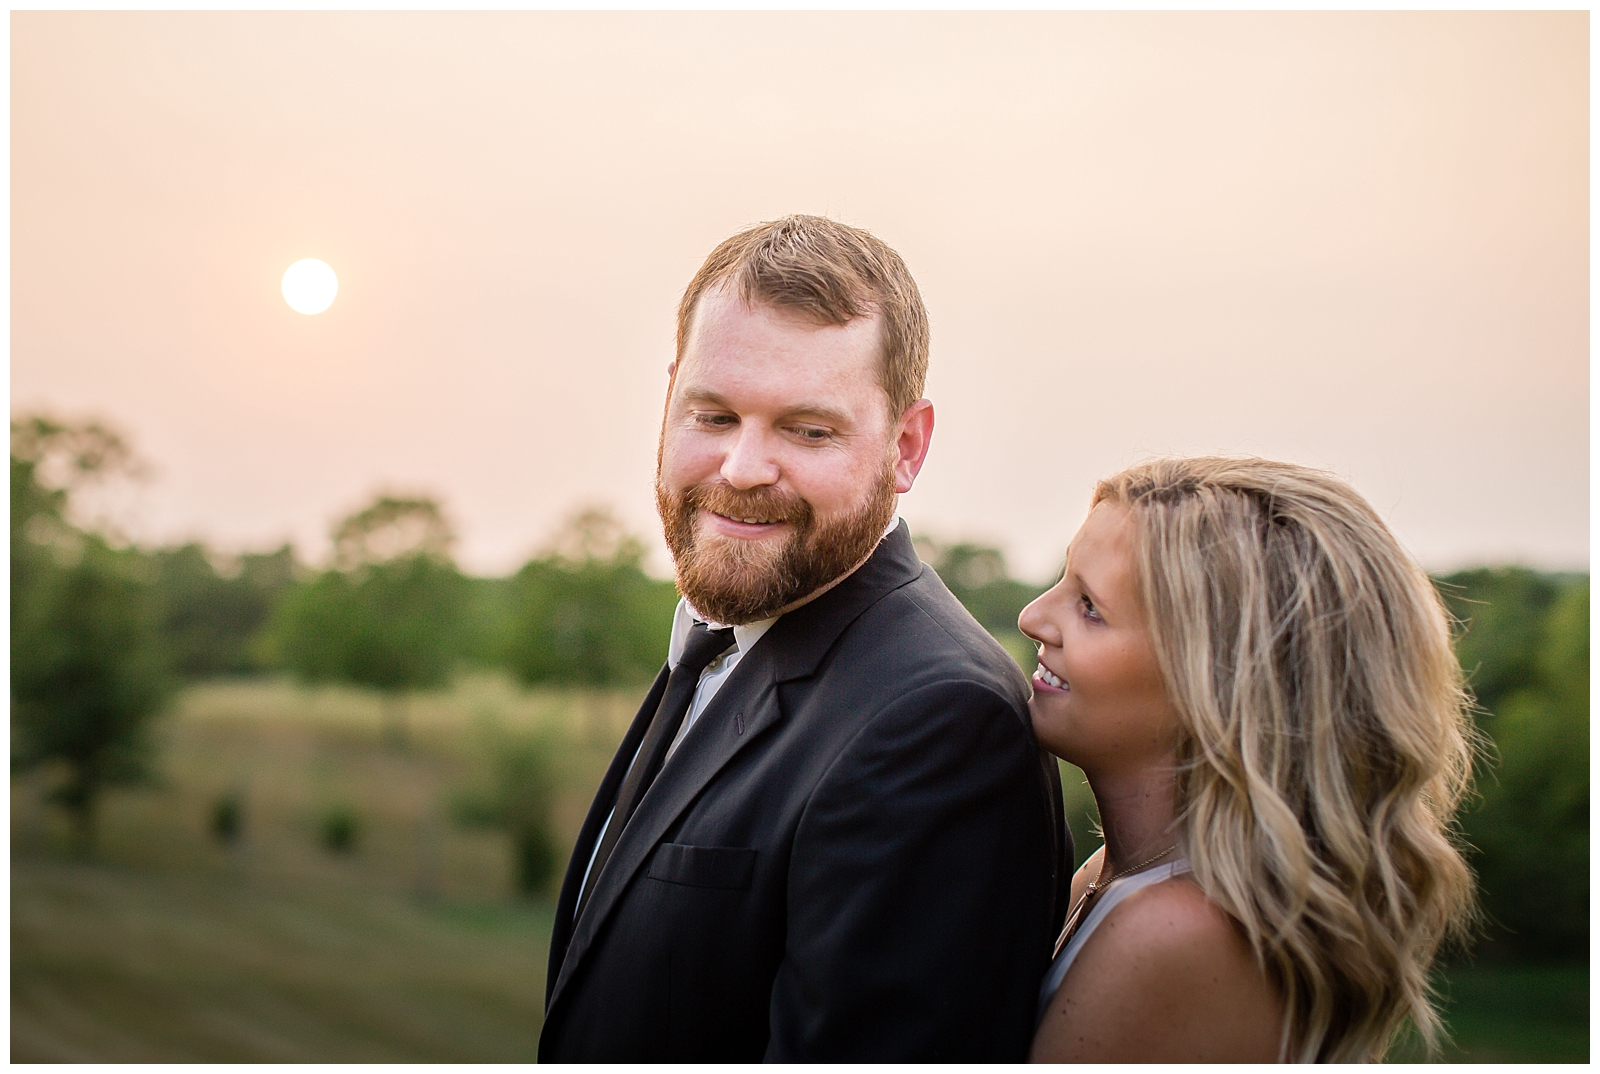 Engagement photography at Ladoga Ridge Winery by Kansas City wedding photographers Wisdom-Watson Weddings.